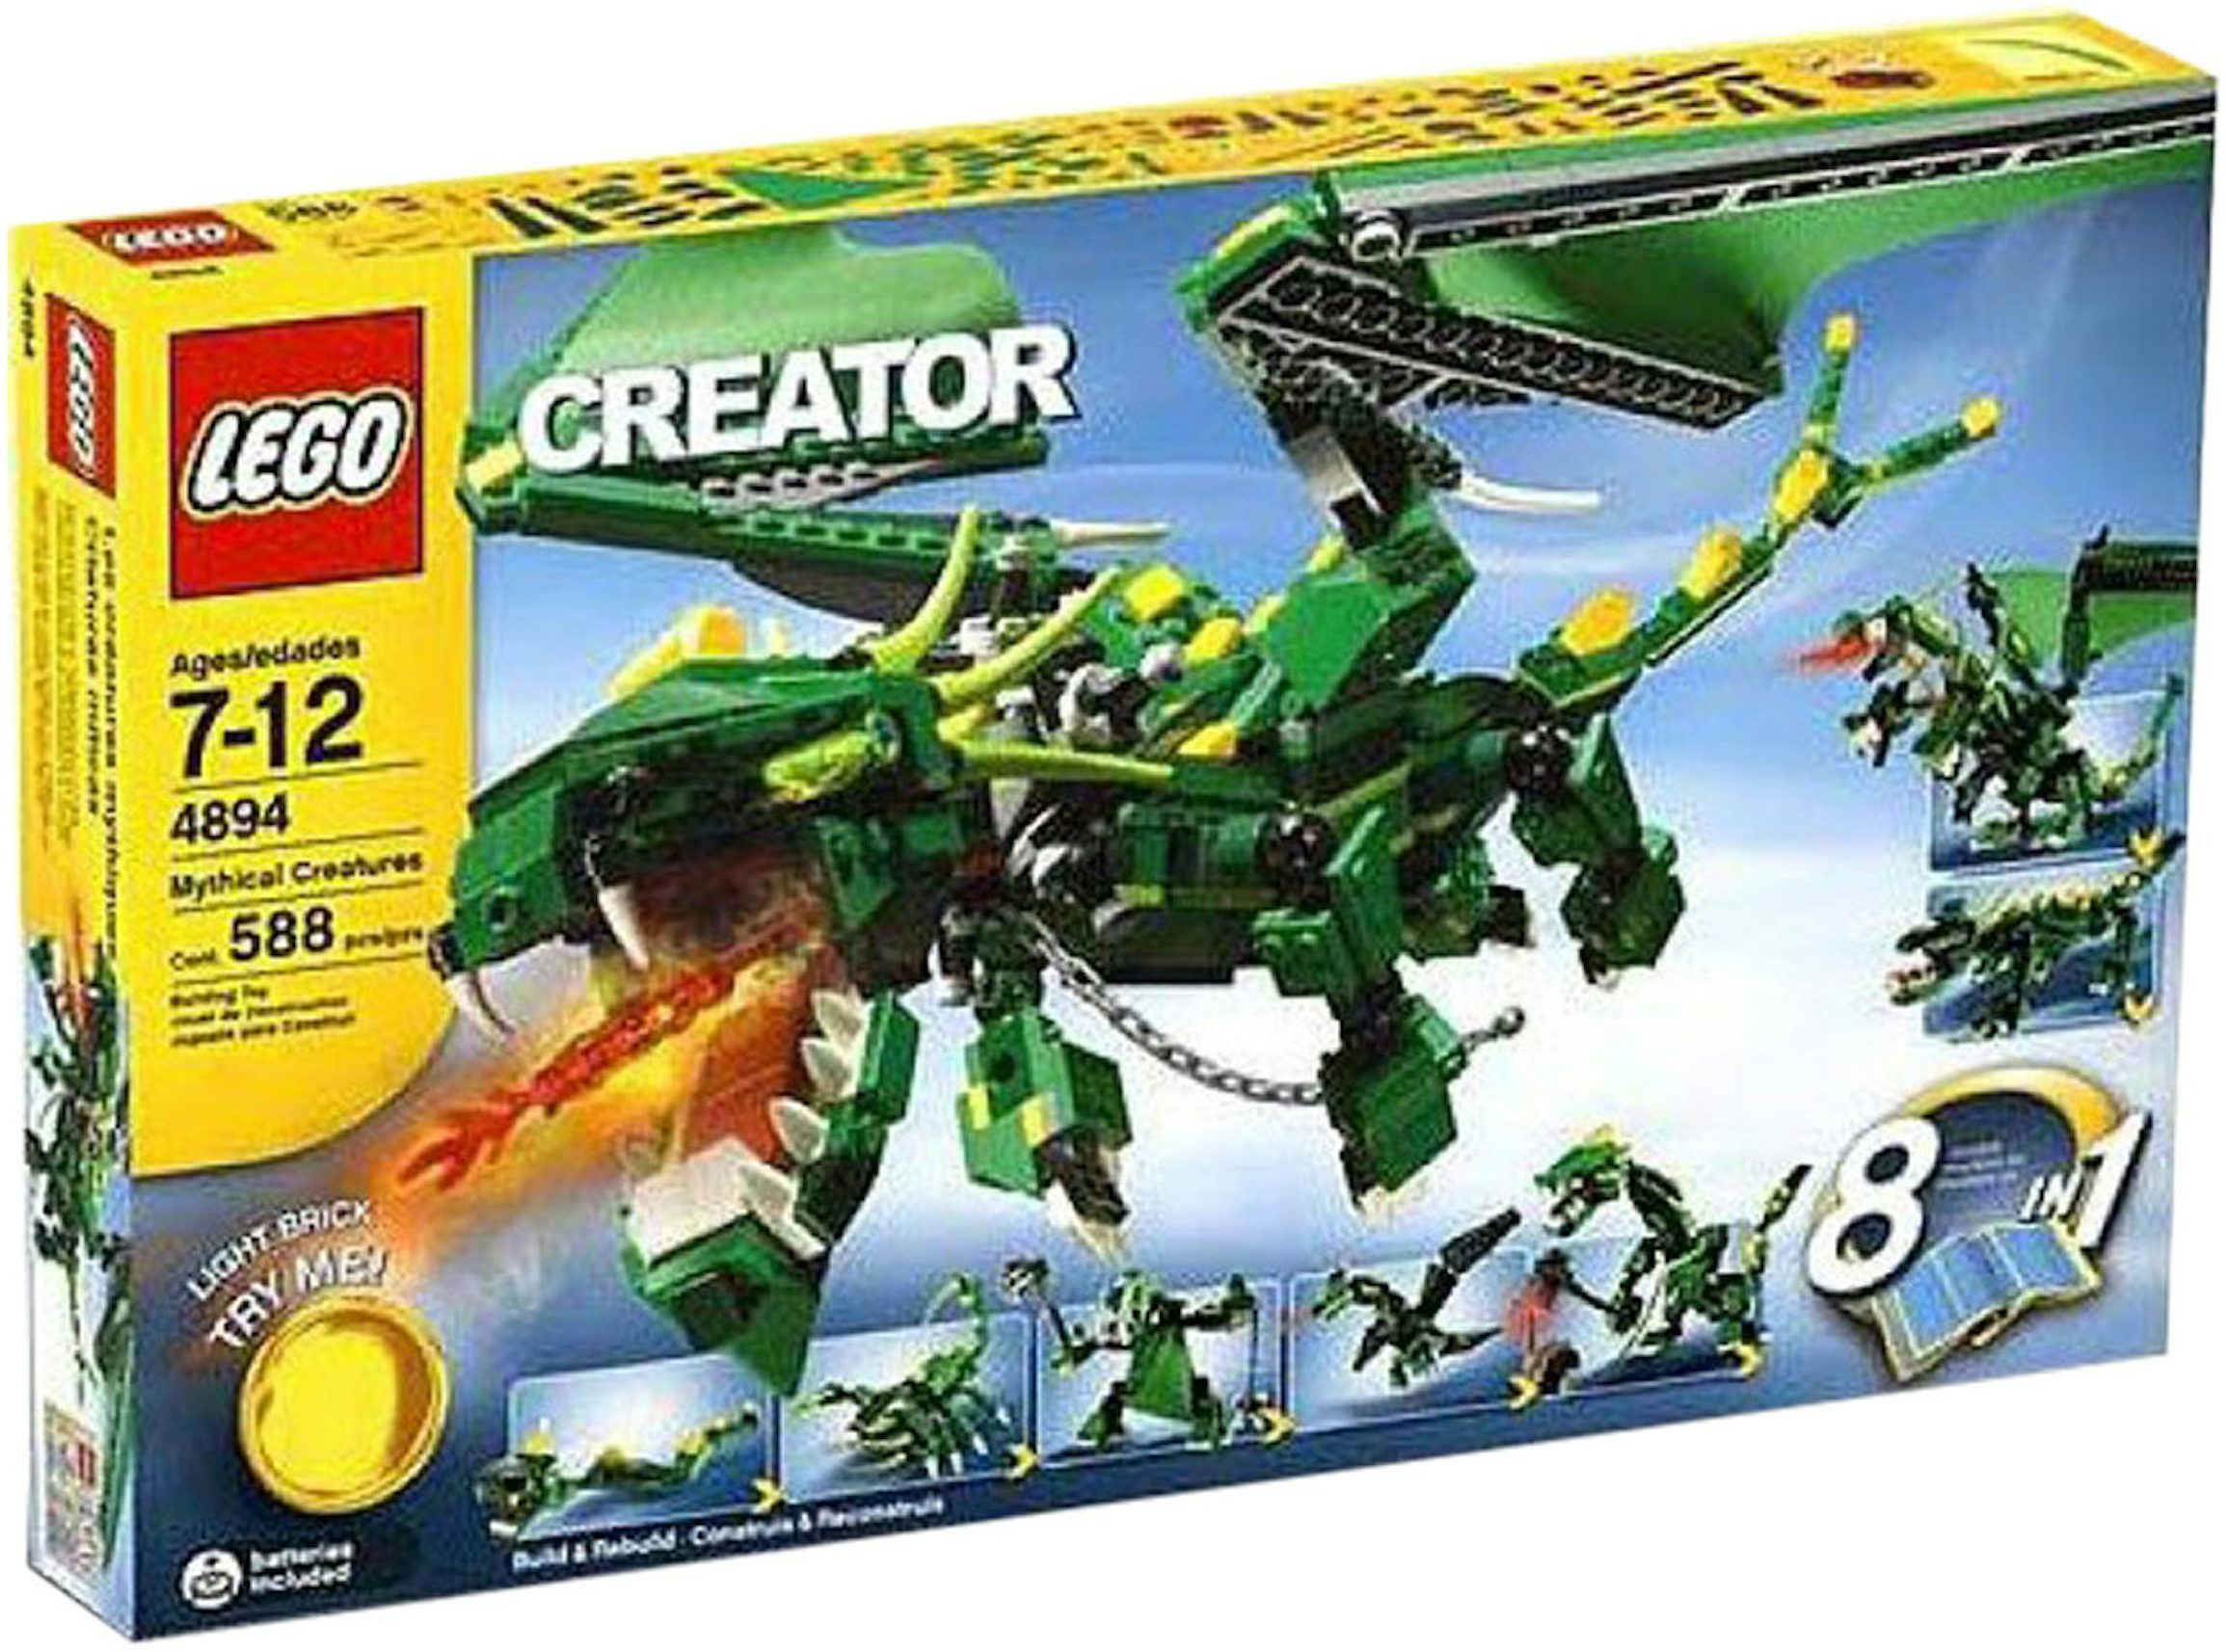 https://images.stockx.com/images/LEGO-Creator-Mythical-Creatures-Set-4894.jpg?fit=fill&bg=FFFFFF&w=1200&h=857&fm=jpg&auto=compress&dpr=2&trim=color&updated_at=1647883706&q=60